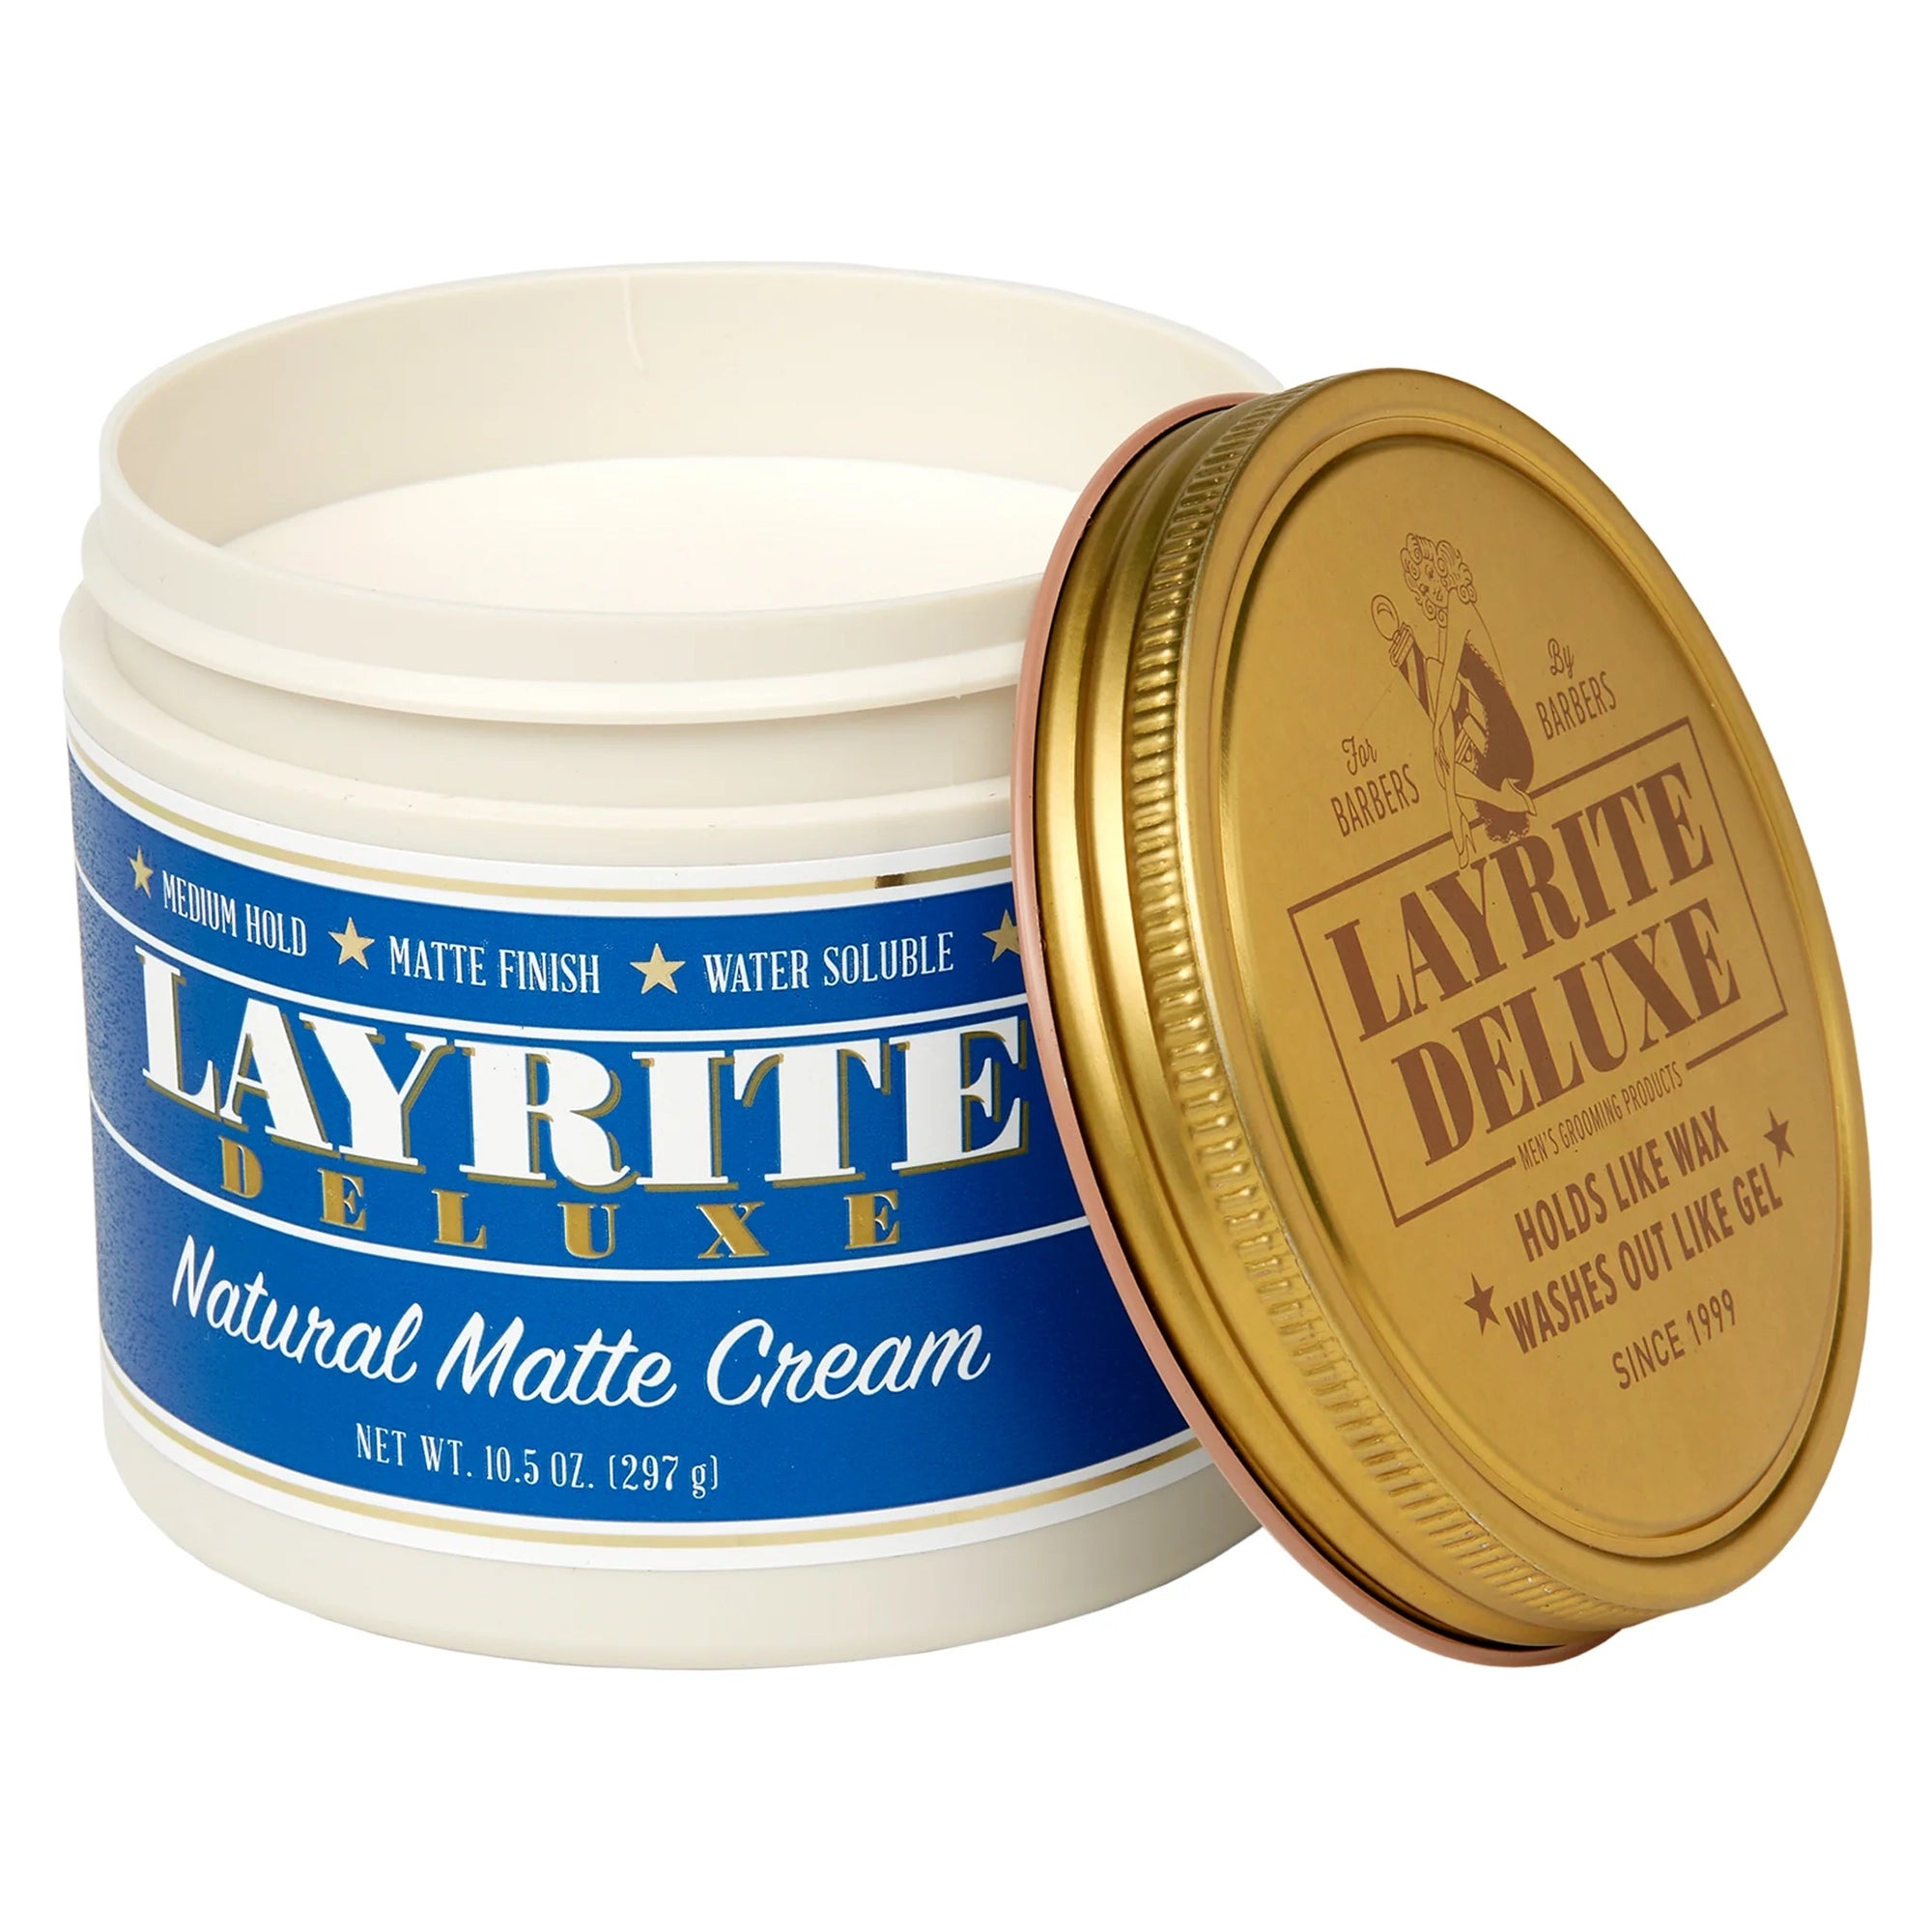 Layrite Natural Matte Cream 10.5oz / 10.5